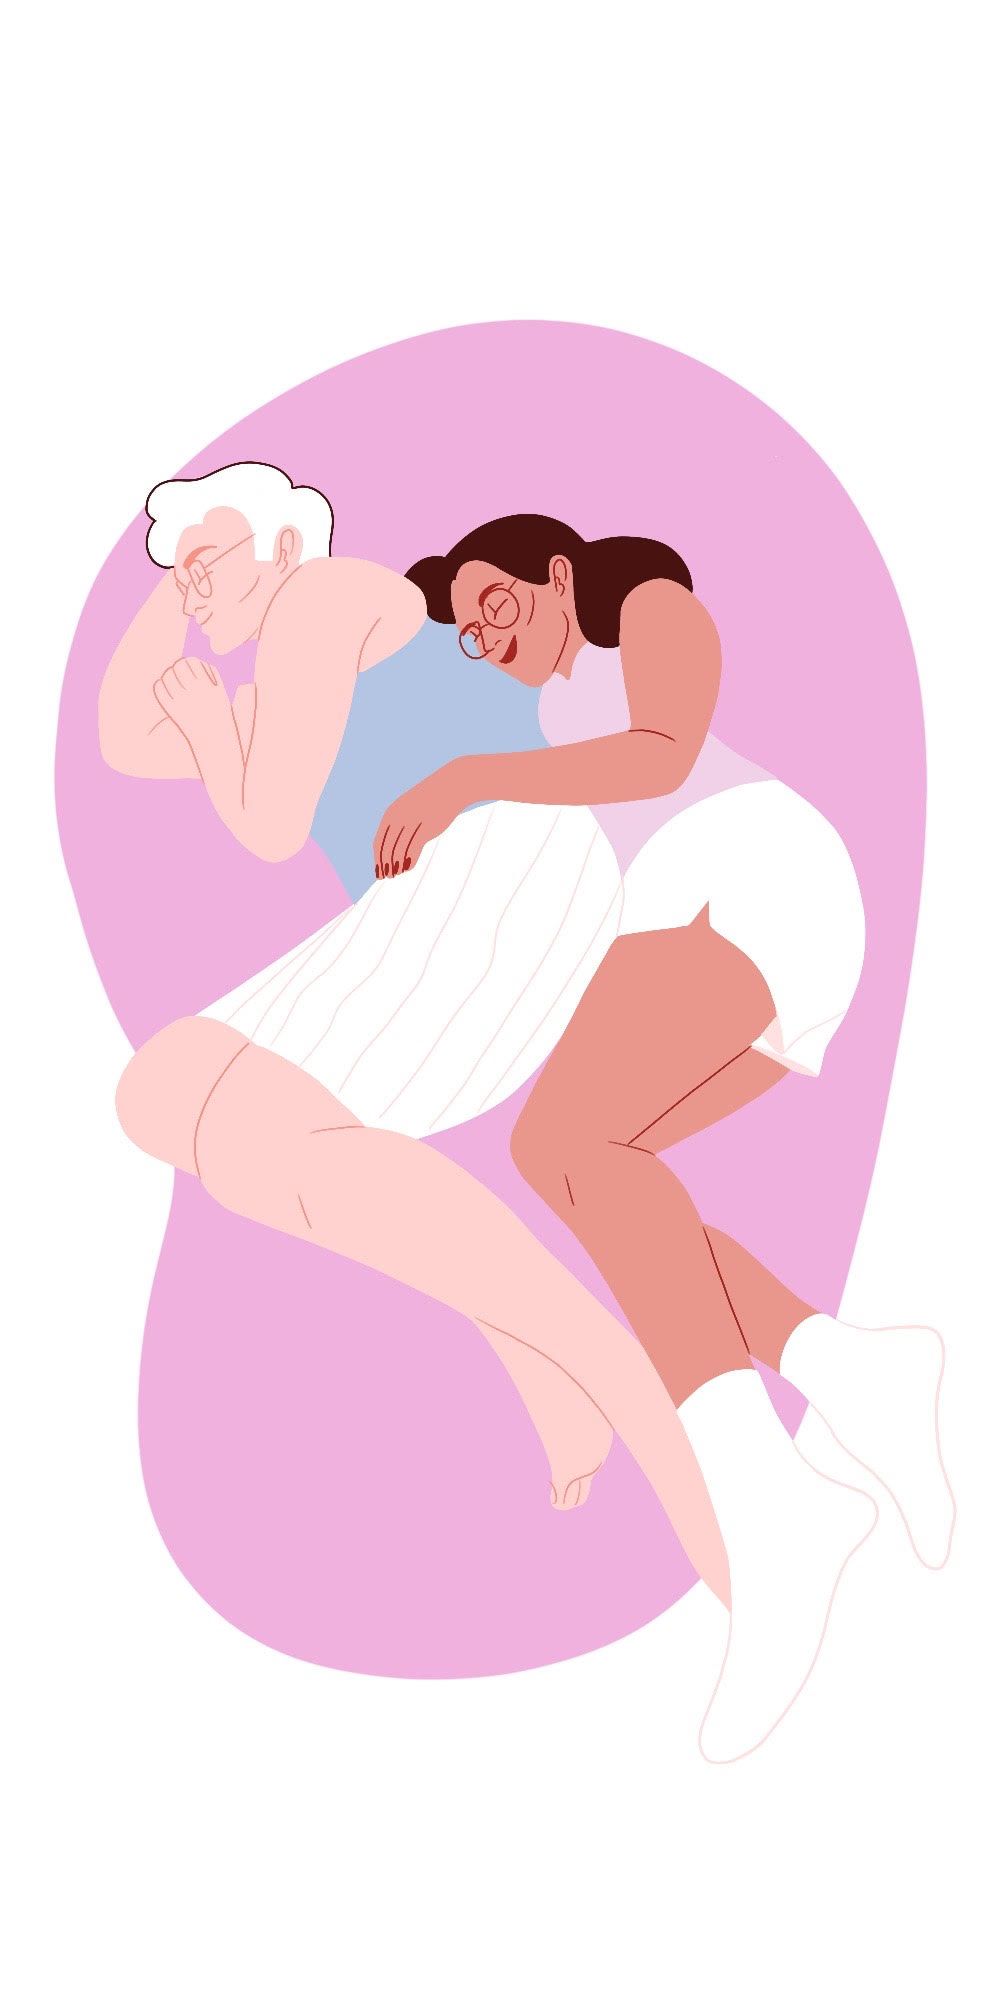 Different ways to cuddle